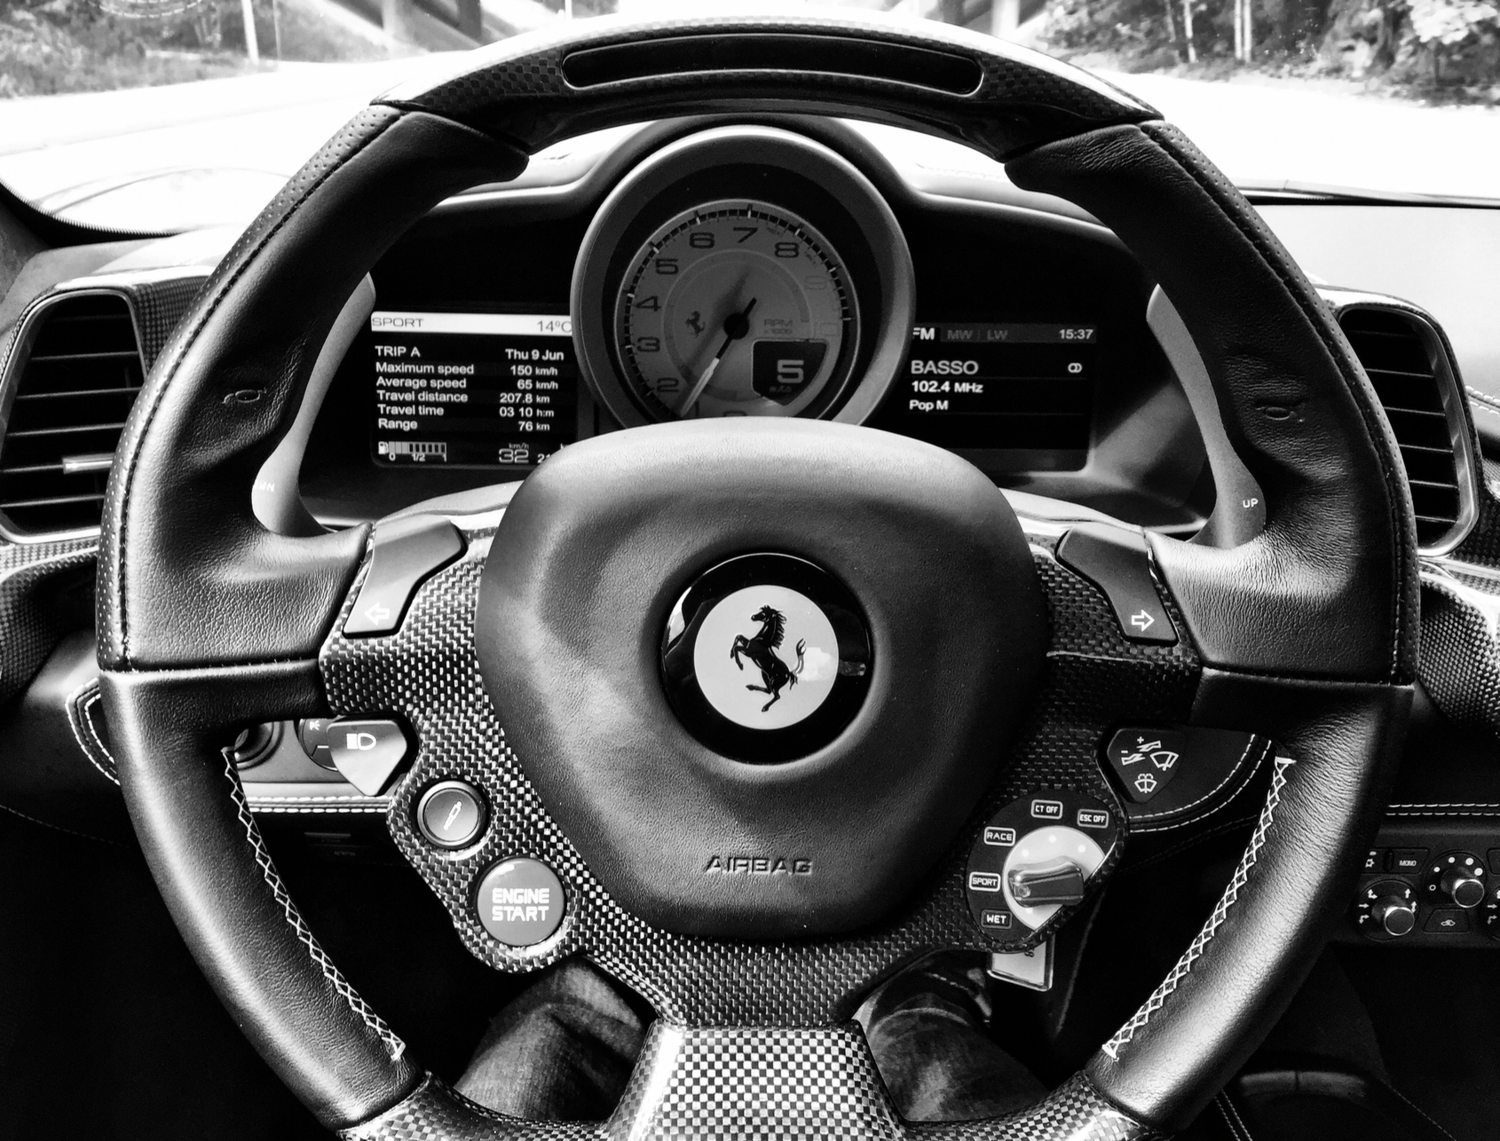 Ferrari 458 Cockpit View